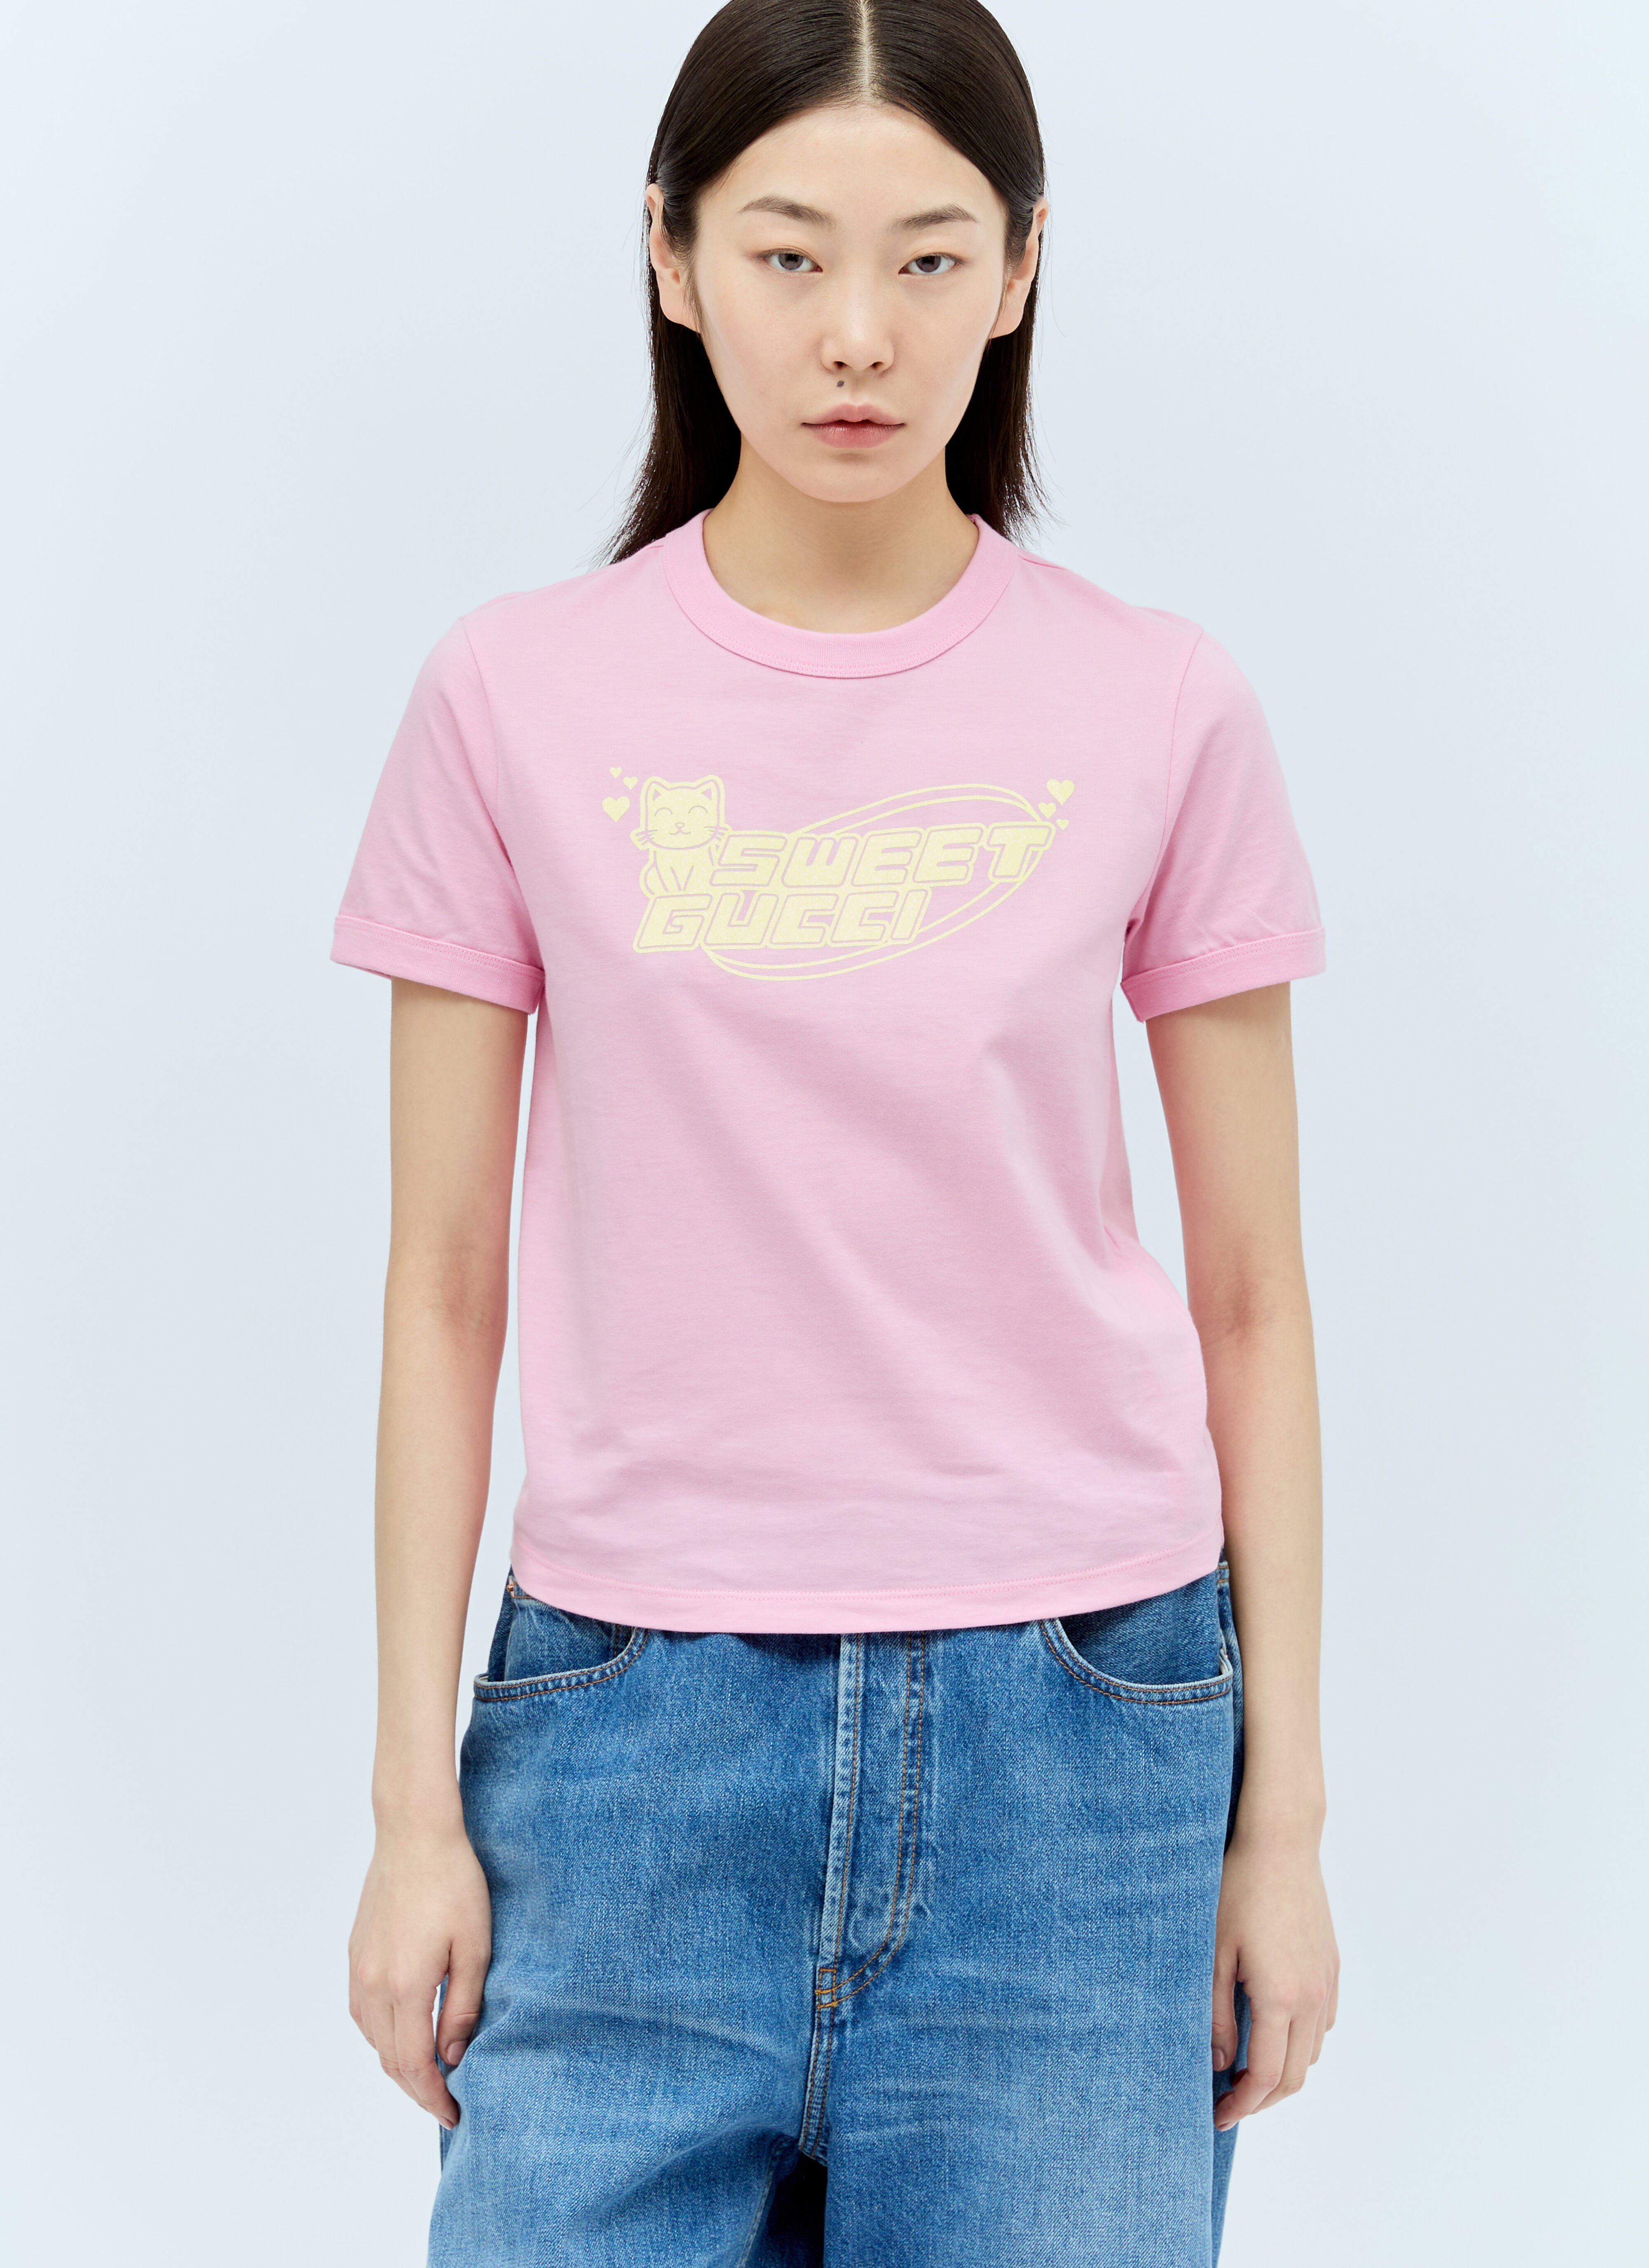 Gucci 그래픽 아플리케 티셔츠 핑크 guc0255055